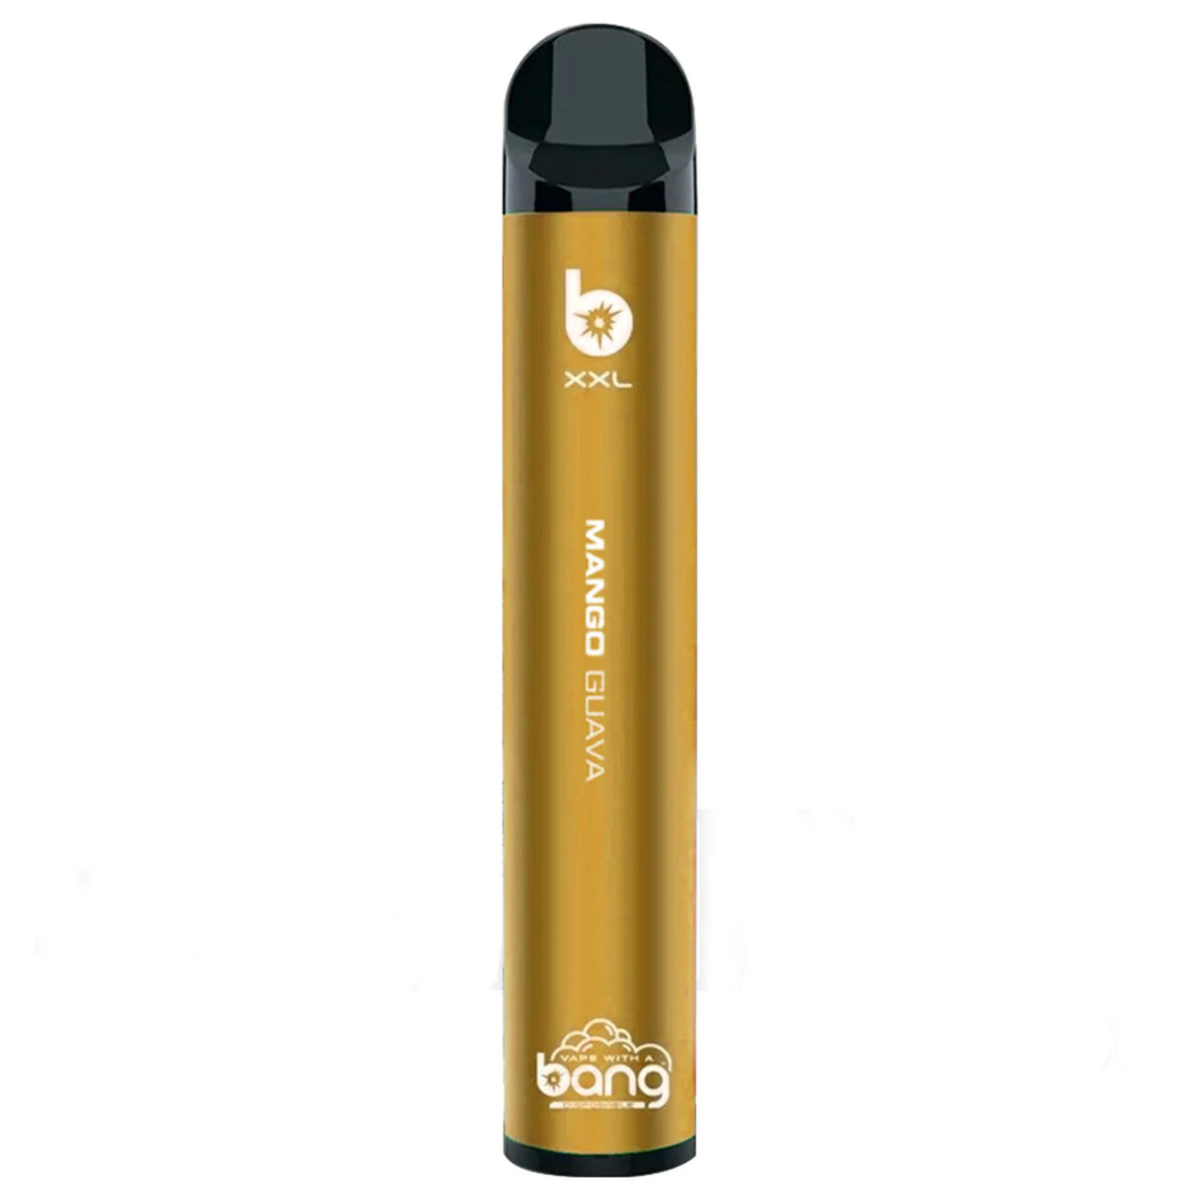 Bang XXL XXtra Disposable Vape Electronic Cigarettes Prifilled Liquid 6ml  Pods E Cig 2000 Puffs 800mAh Battery Ecigarette Ecig Ecigs Vapes Pen Device  2% 5% 6% From Apollo2023, $2.22